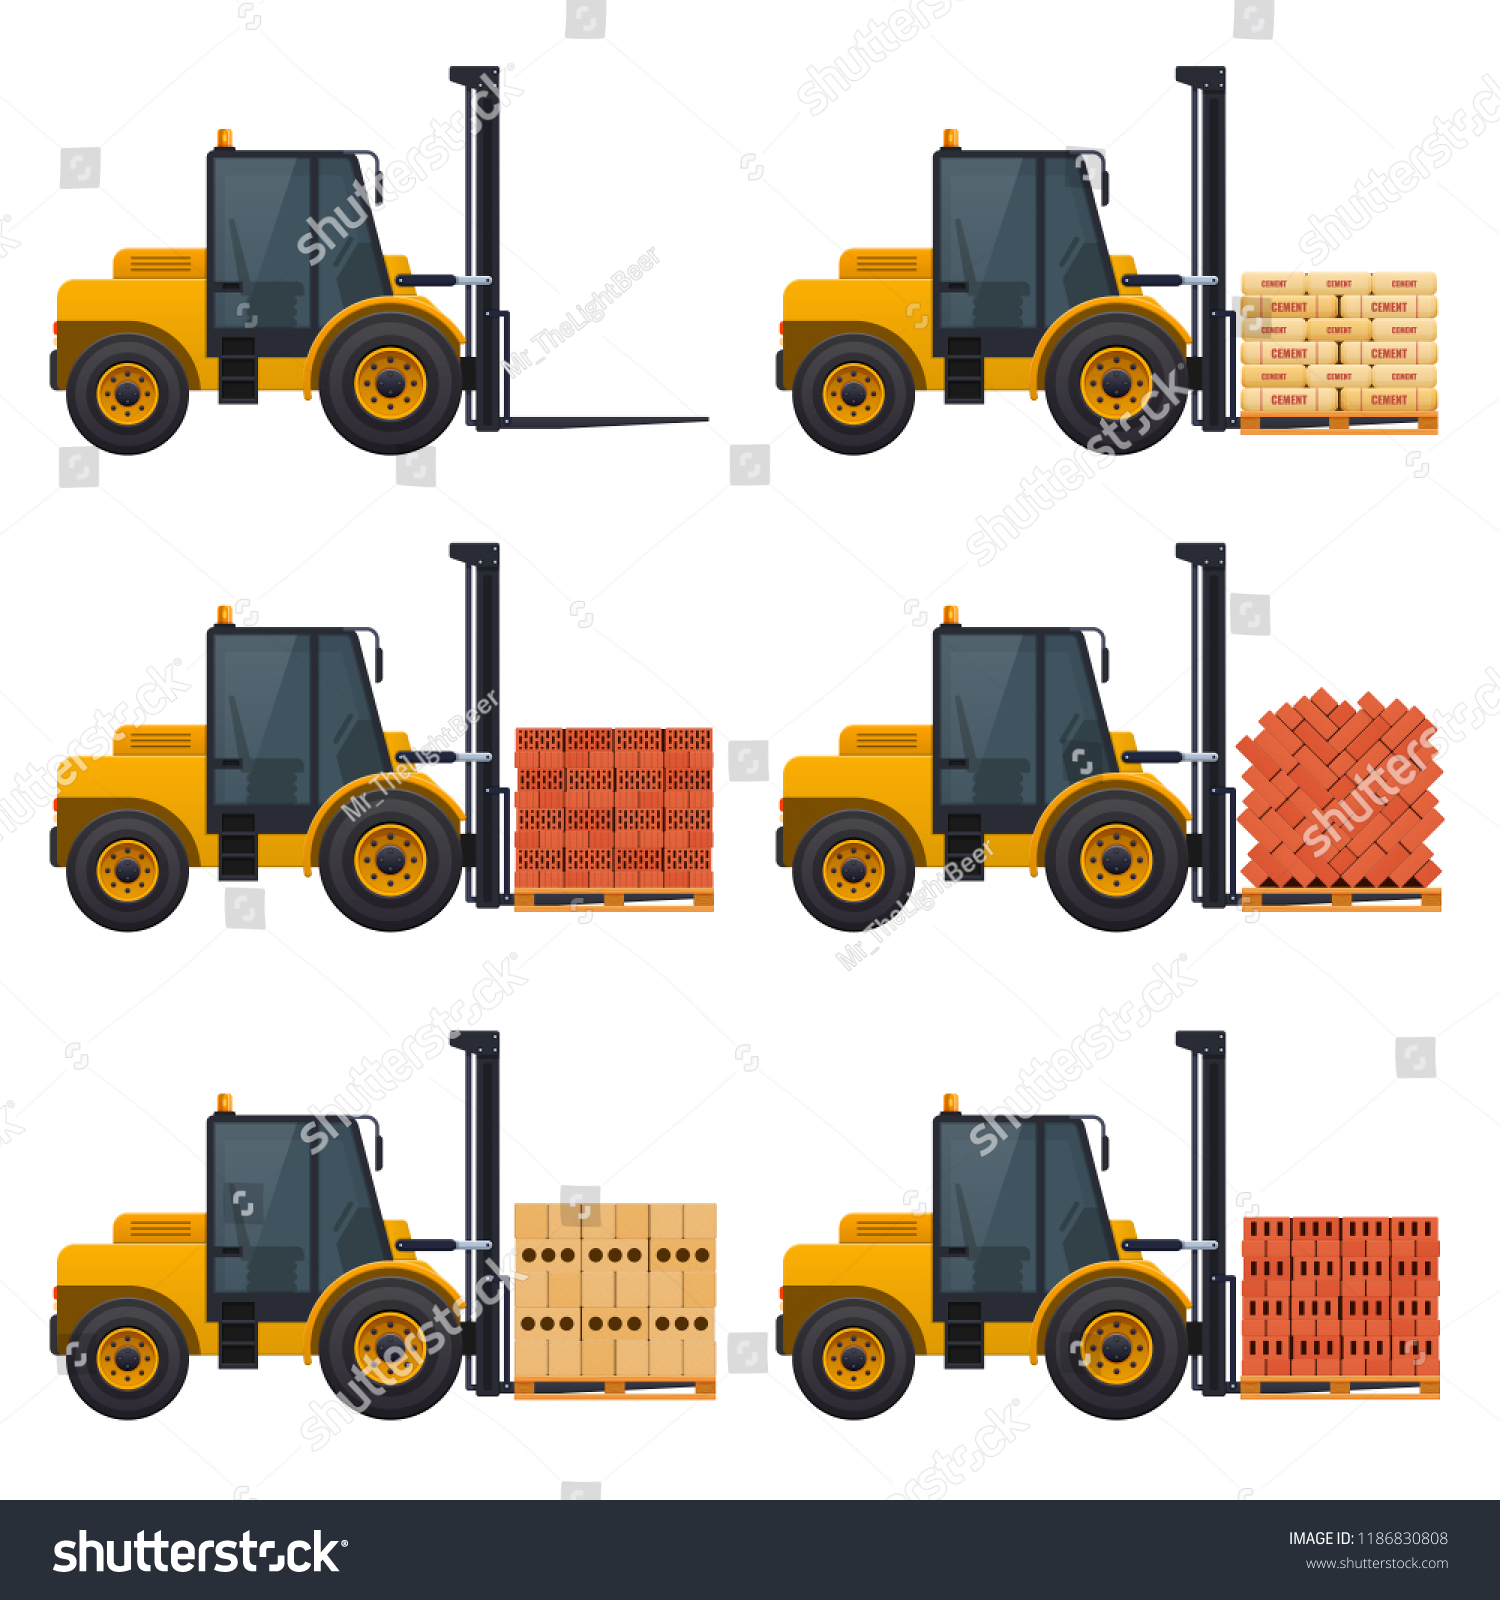 Vector Pallet Bricks Illustration Forklift Carrying Stock Vector Royalty Free 1186830808